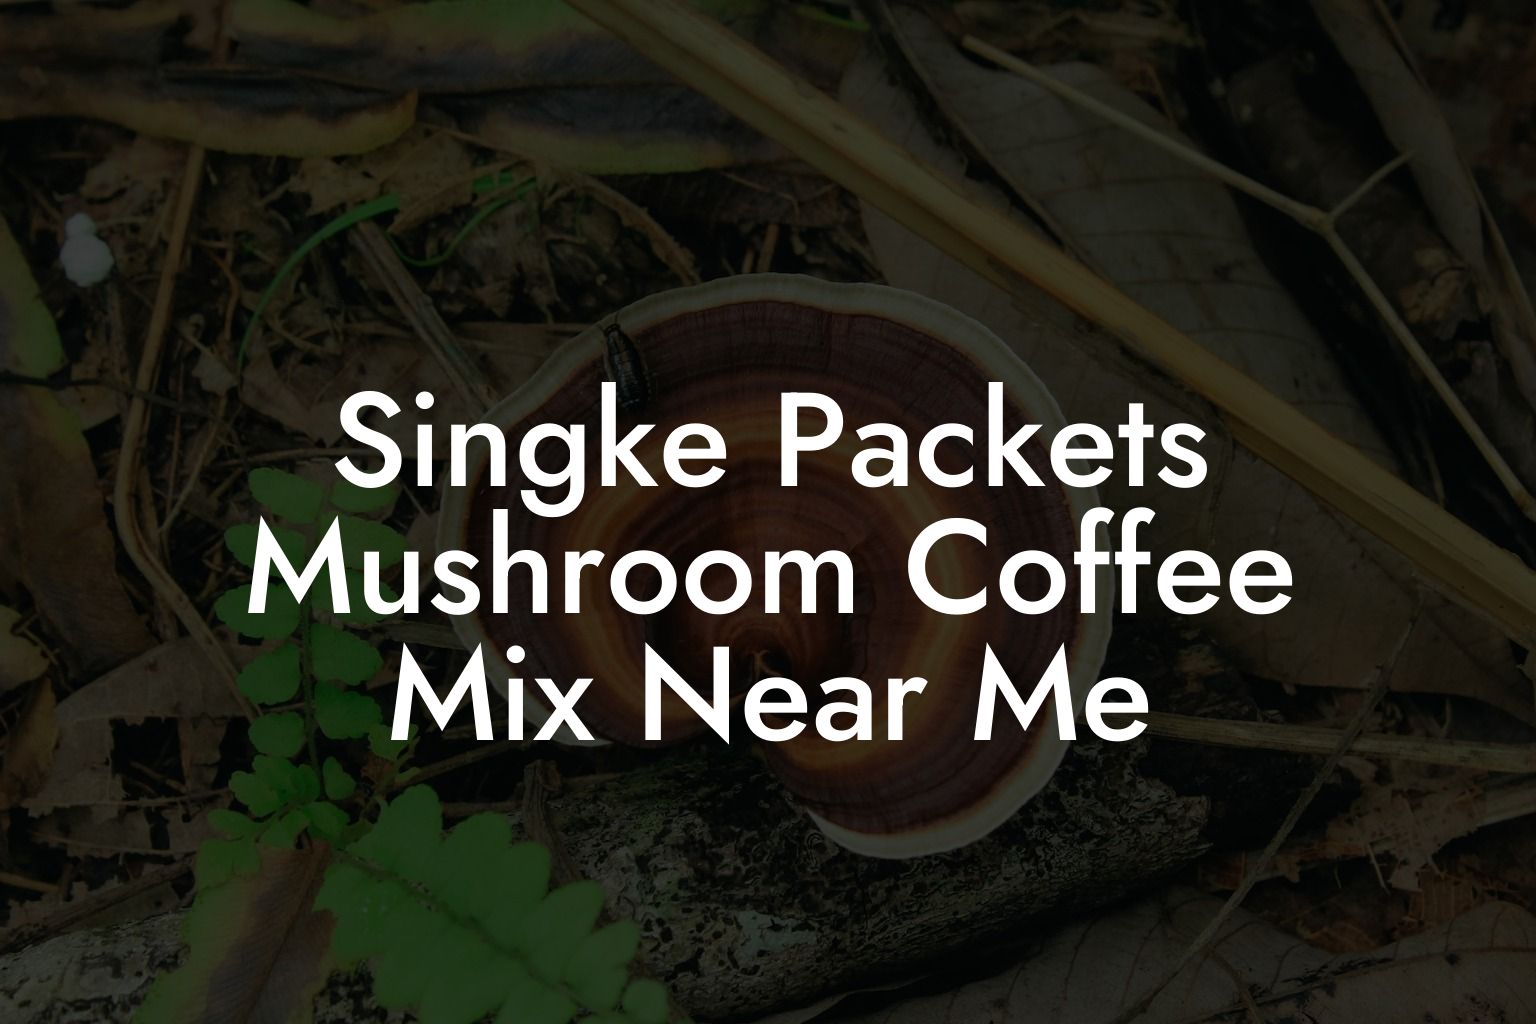 Singke Packets Mushroom Coffee Mix Near Me